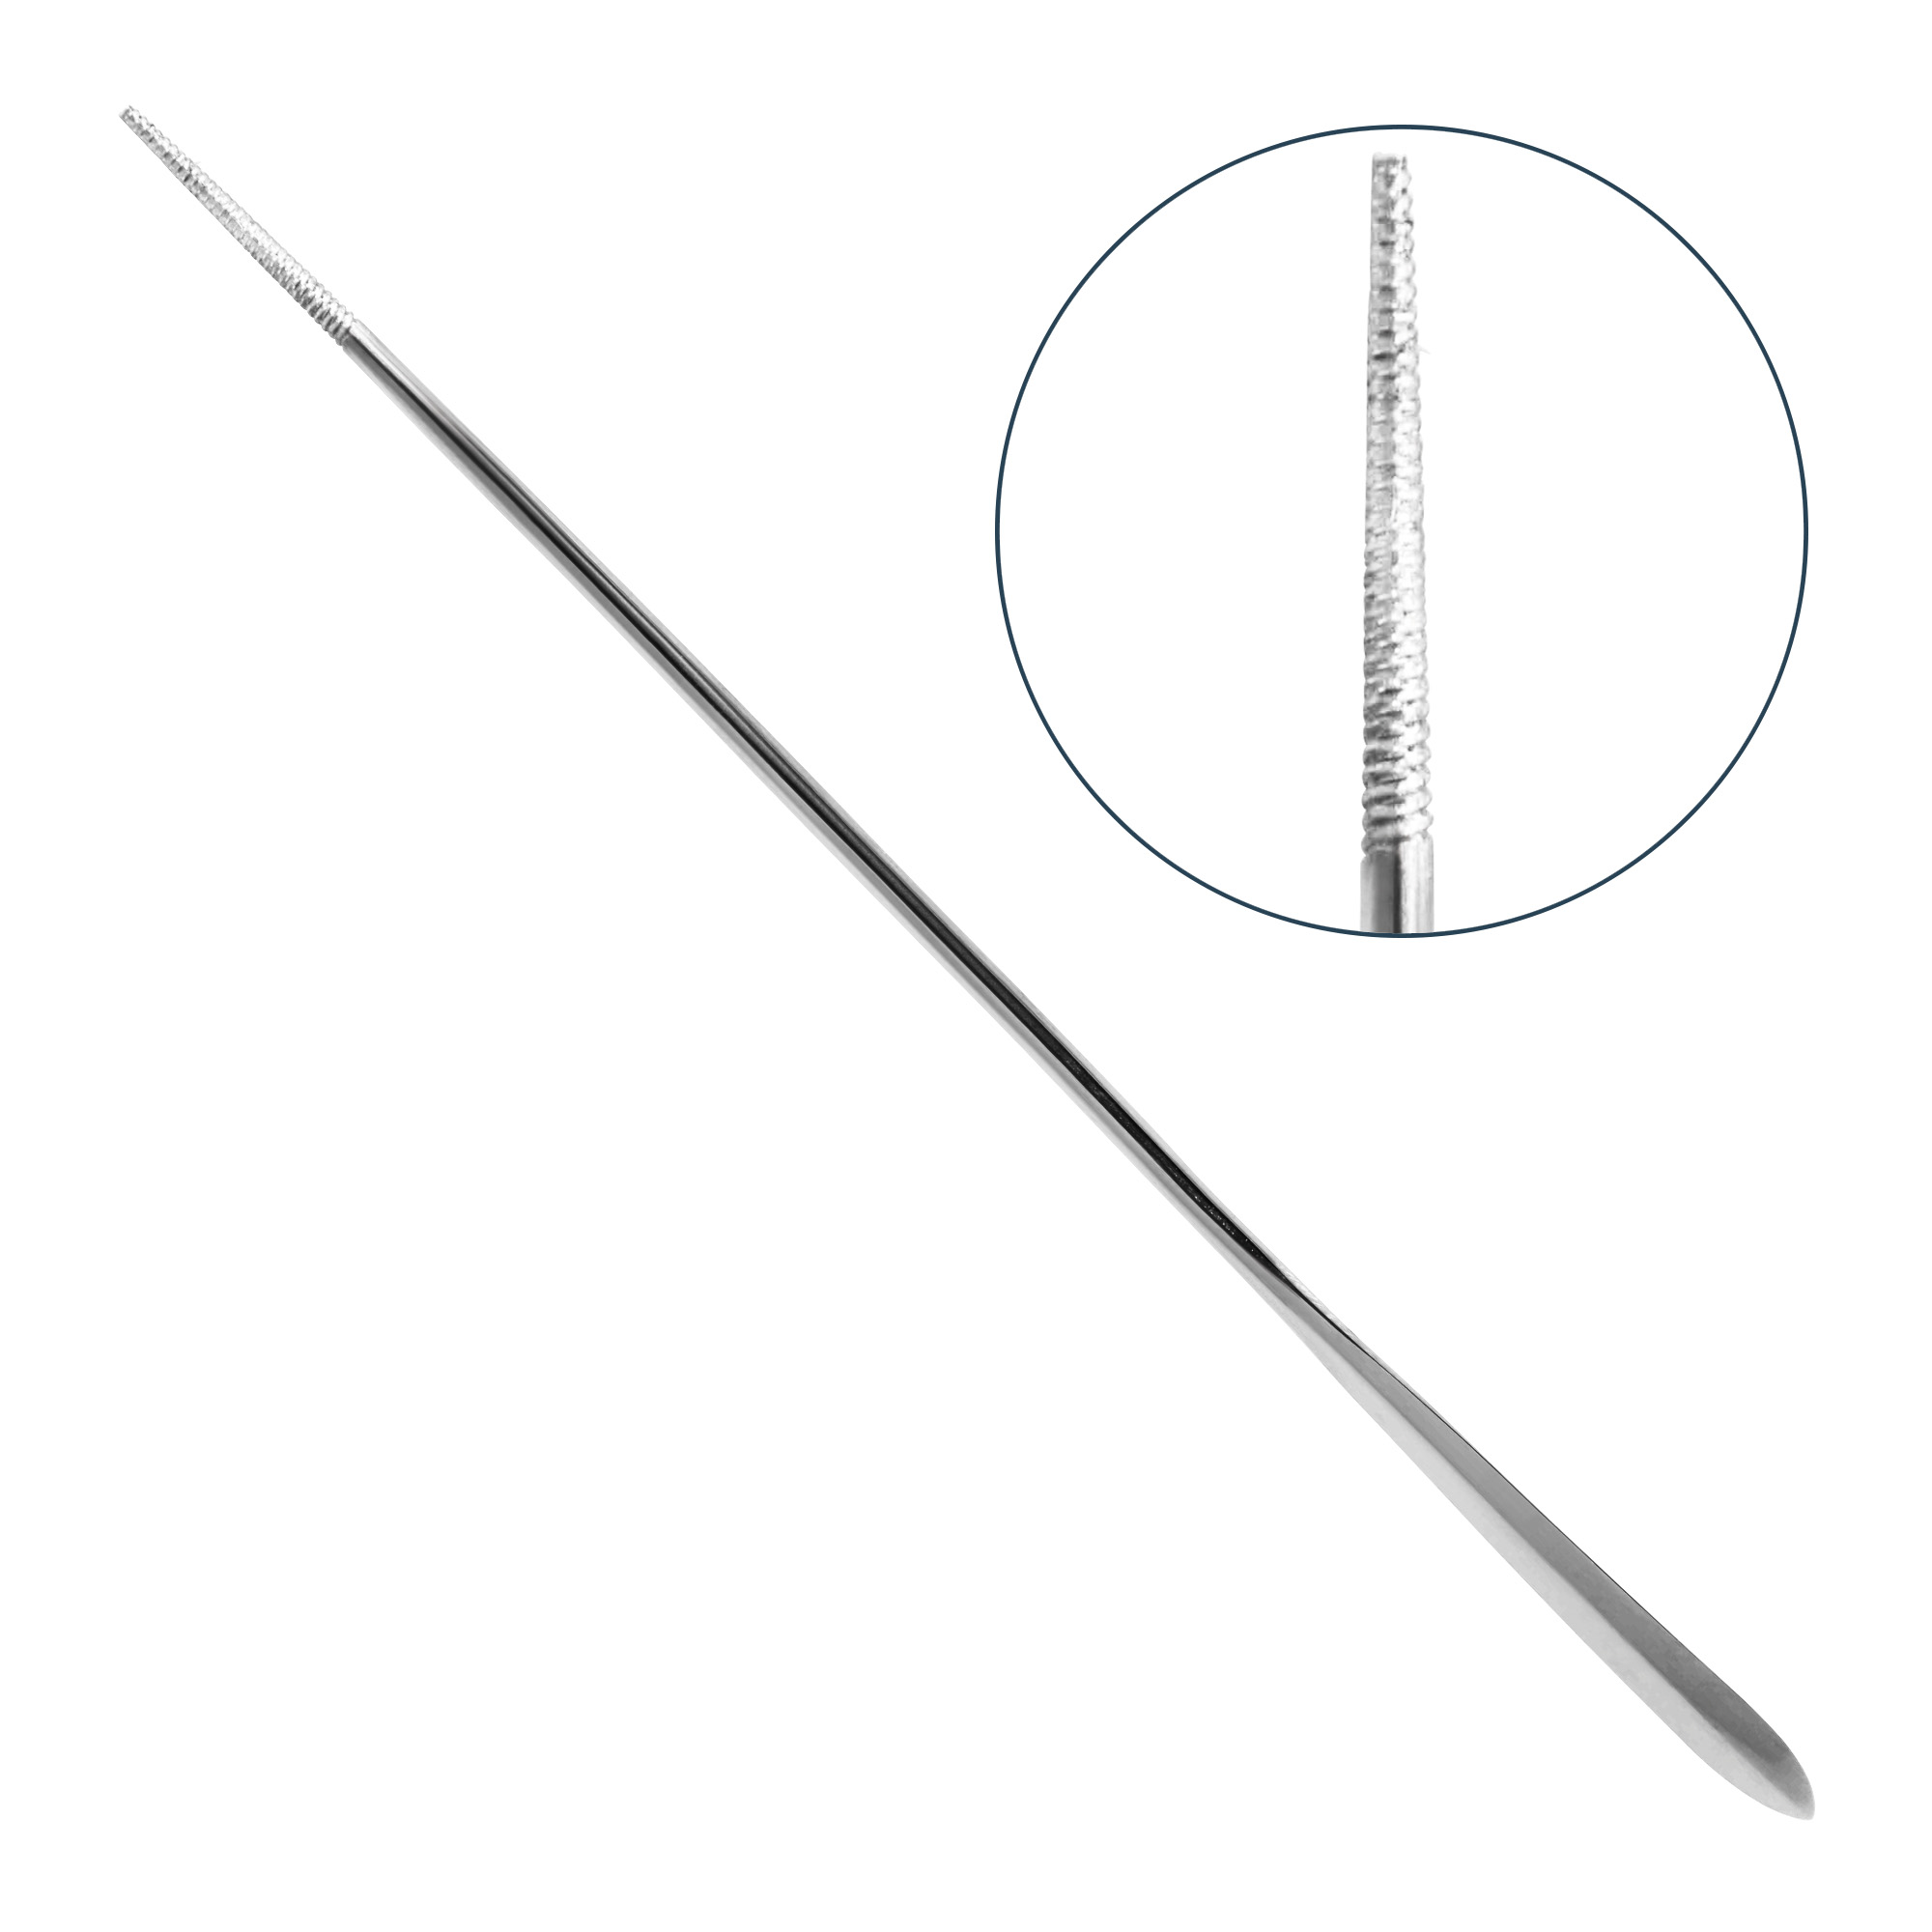 Stainless steel spatula winder